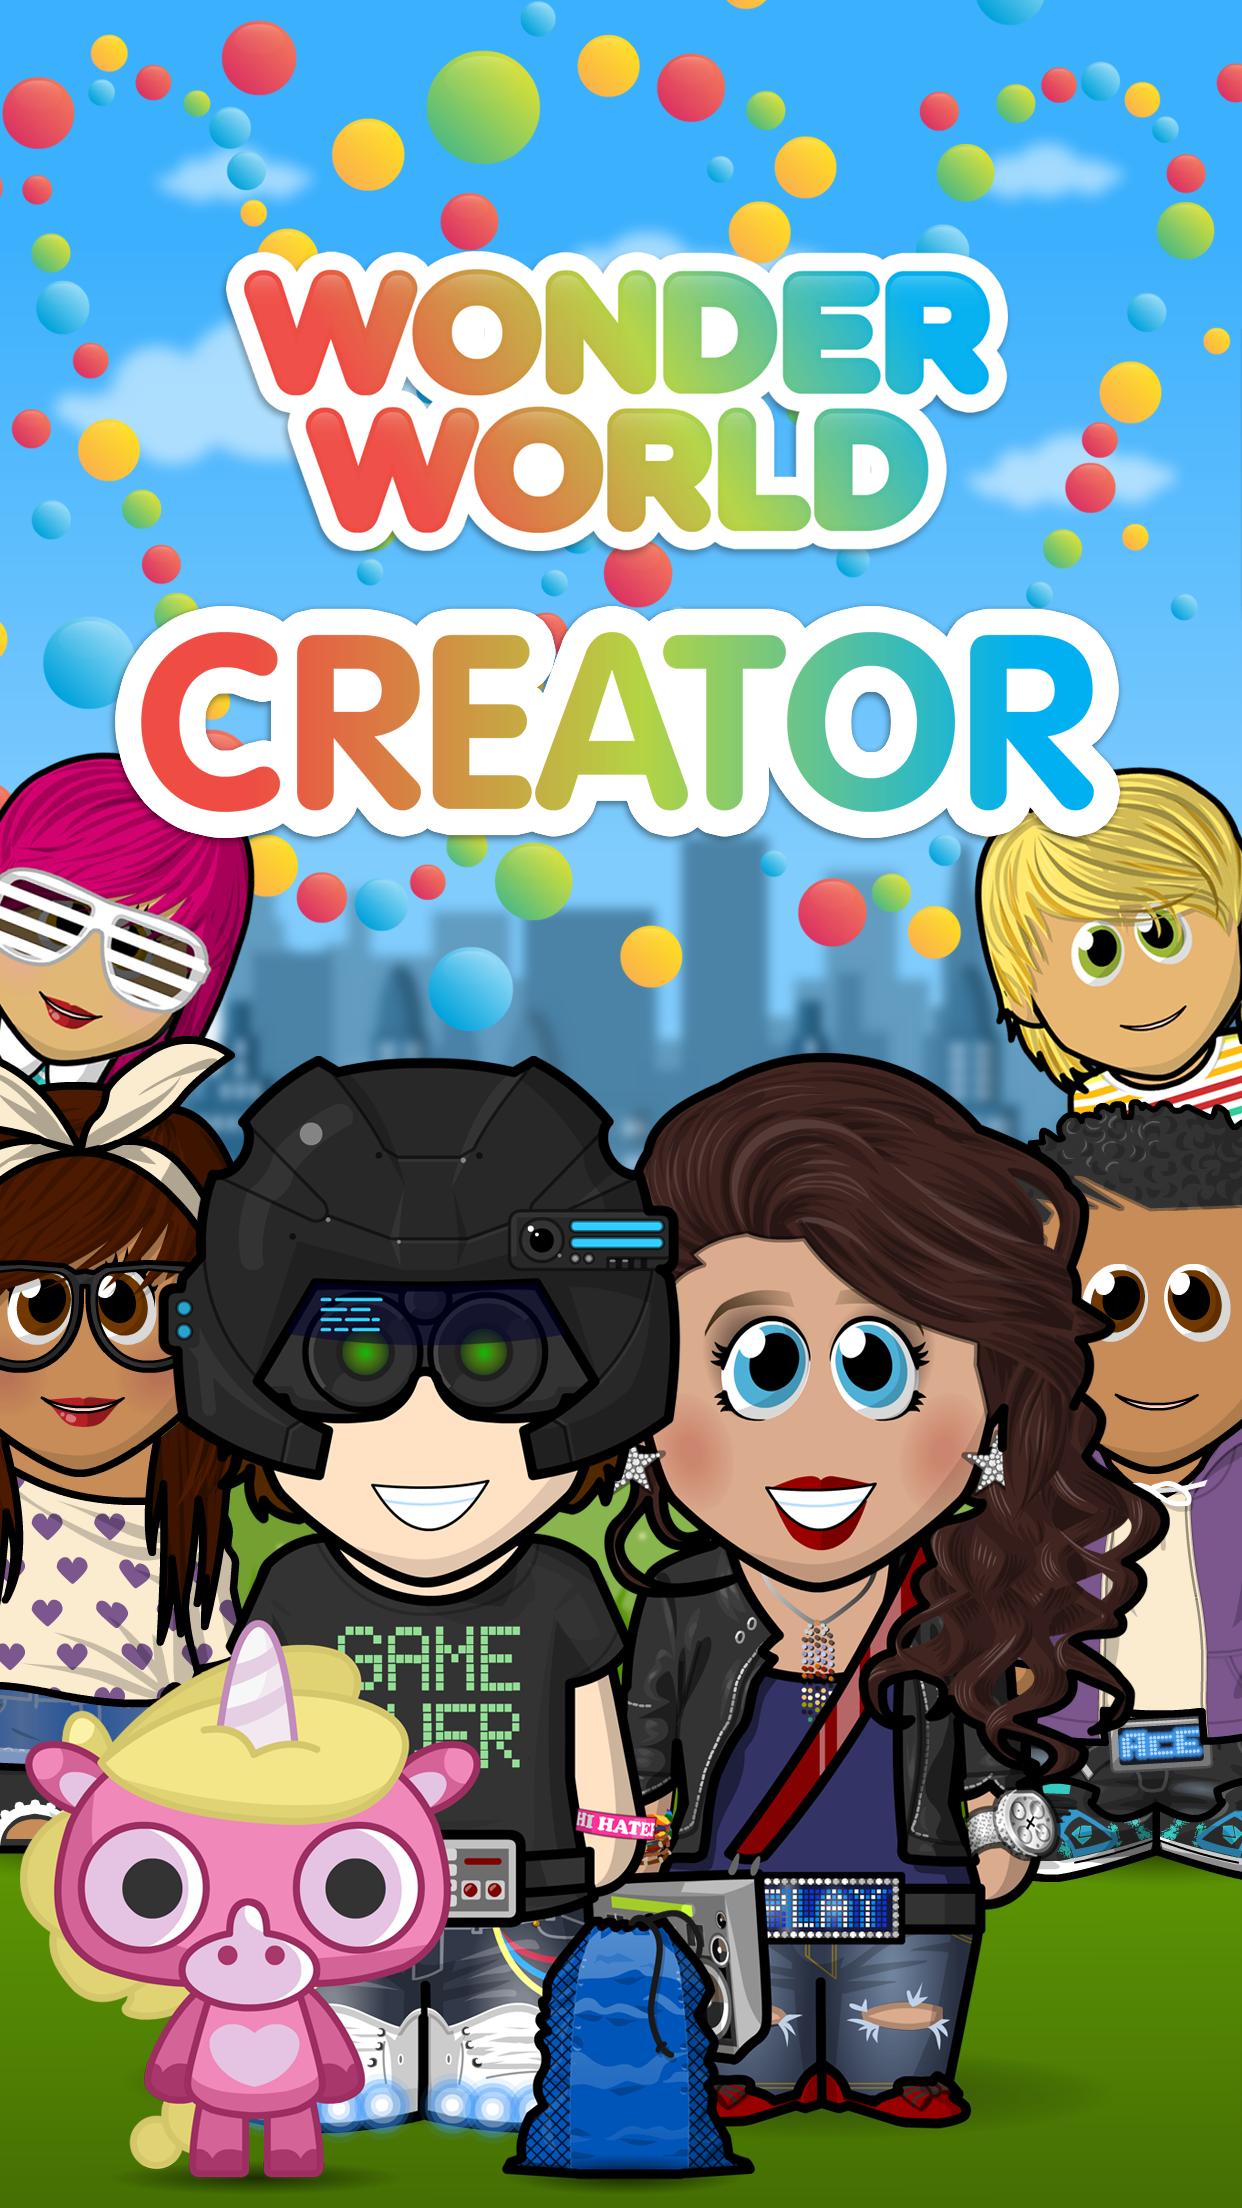 Wonder world 1. Wonders of the World. World creator Android. World creator.